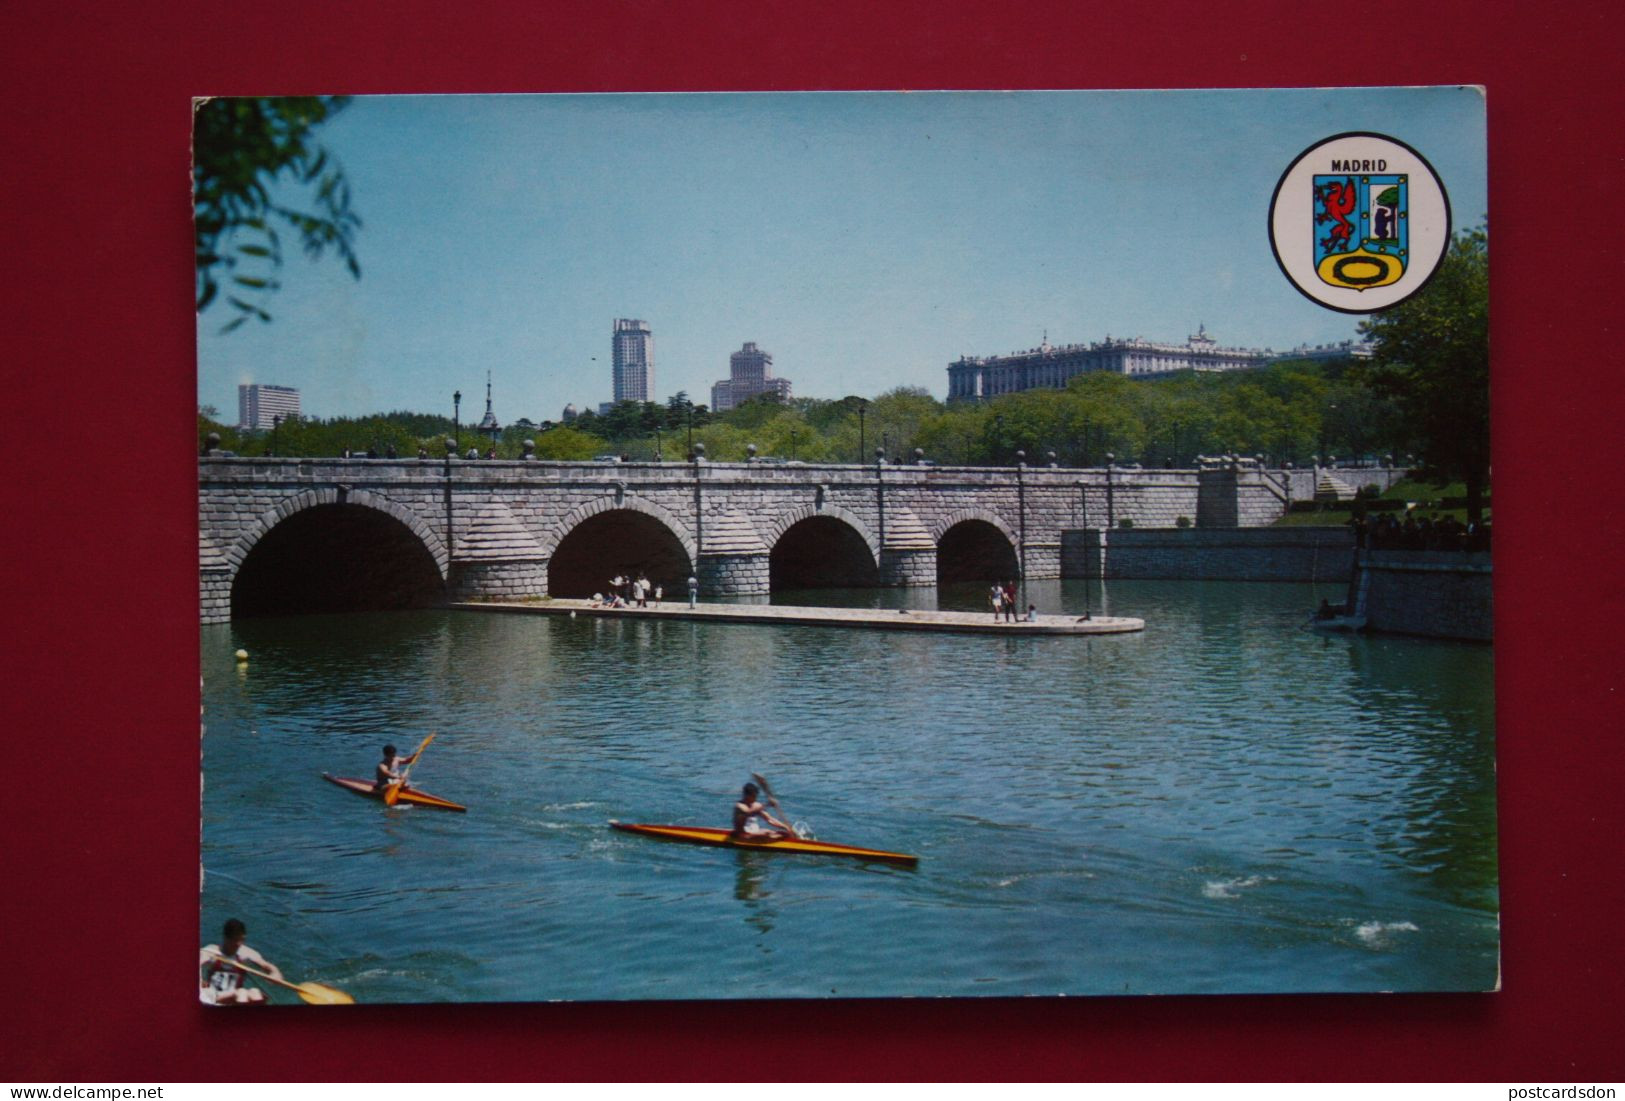 Postcard Madrid -   Segovia Bridge- Rowing -  1970s  KAYAK - Rowing